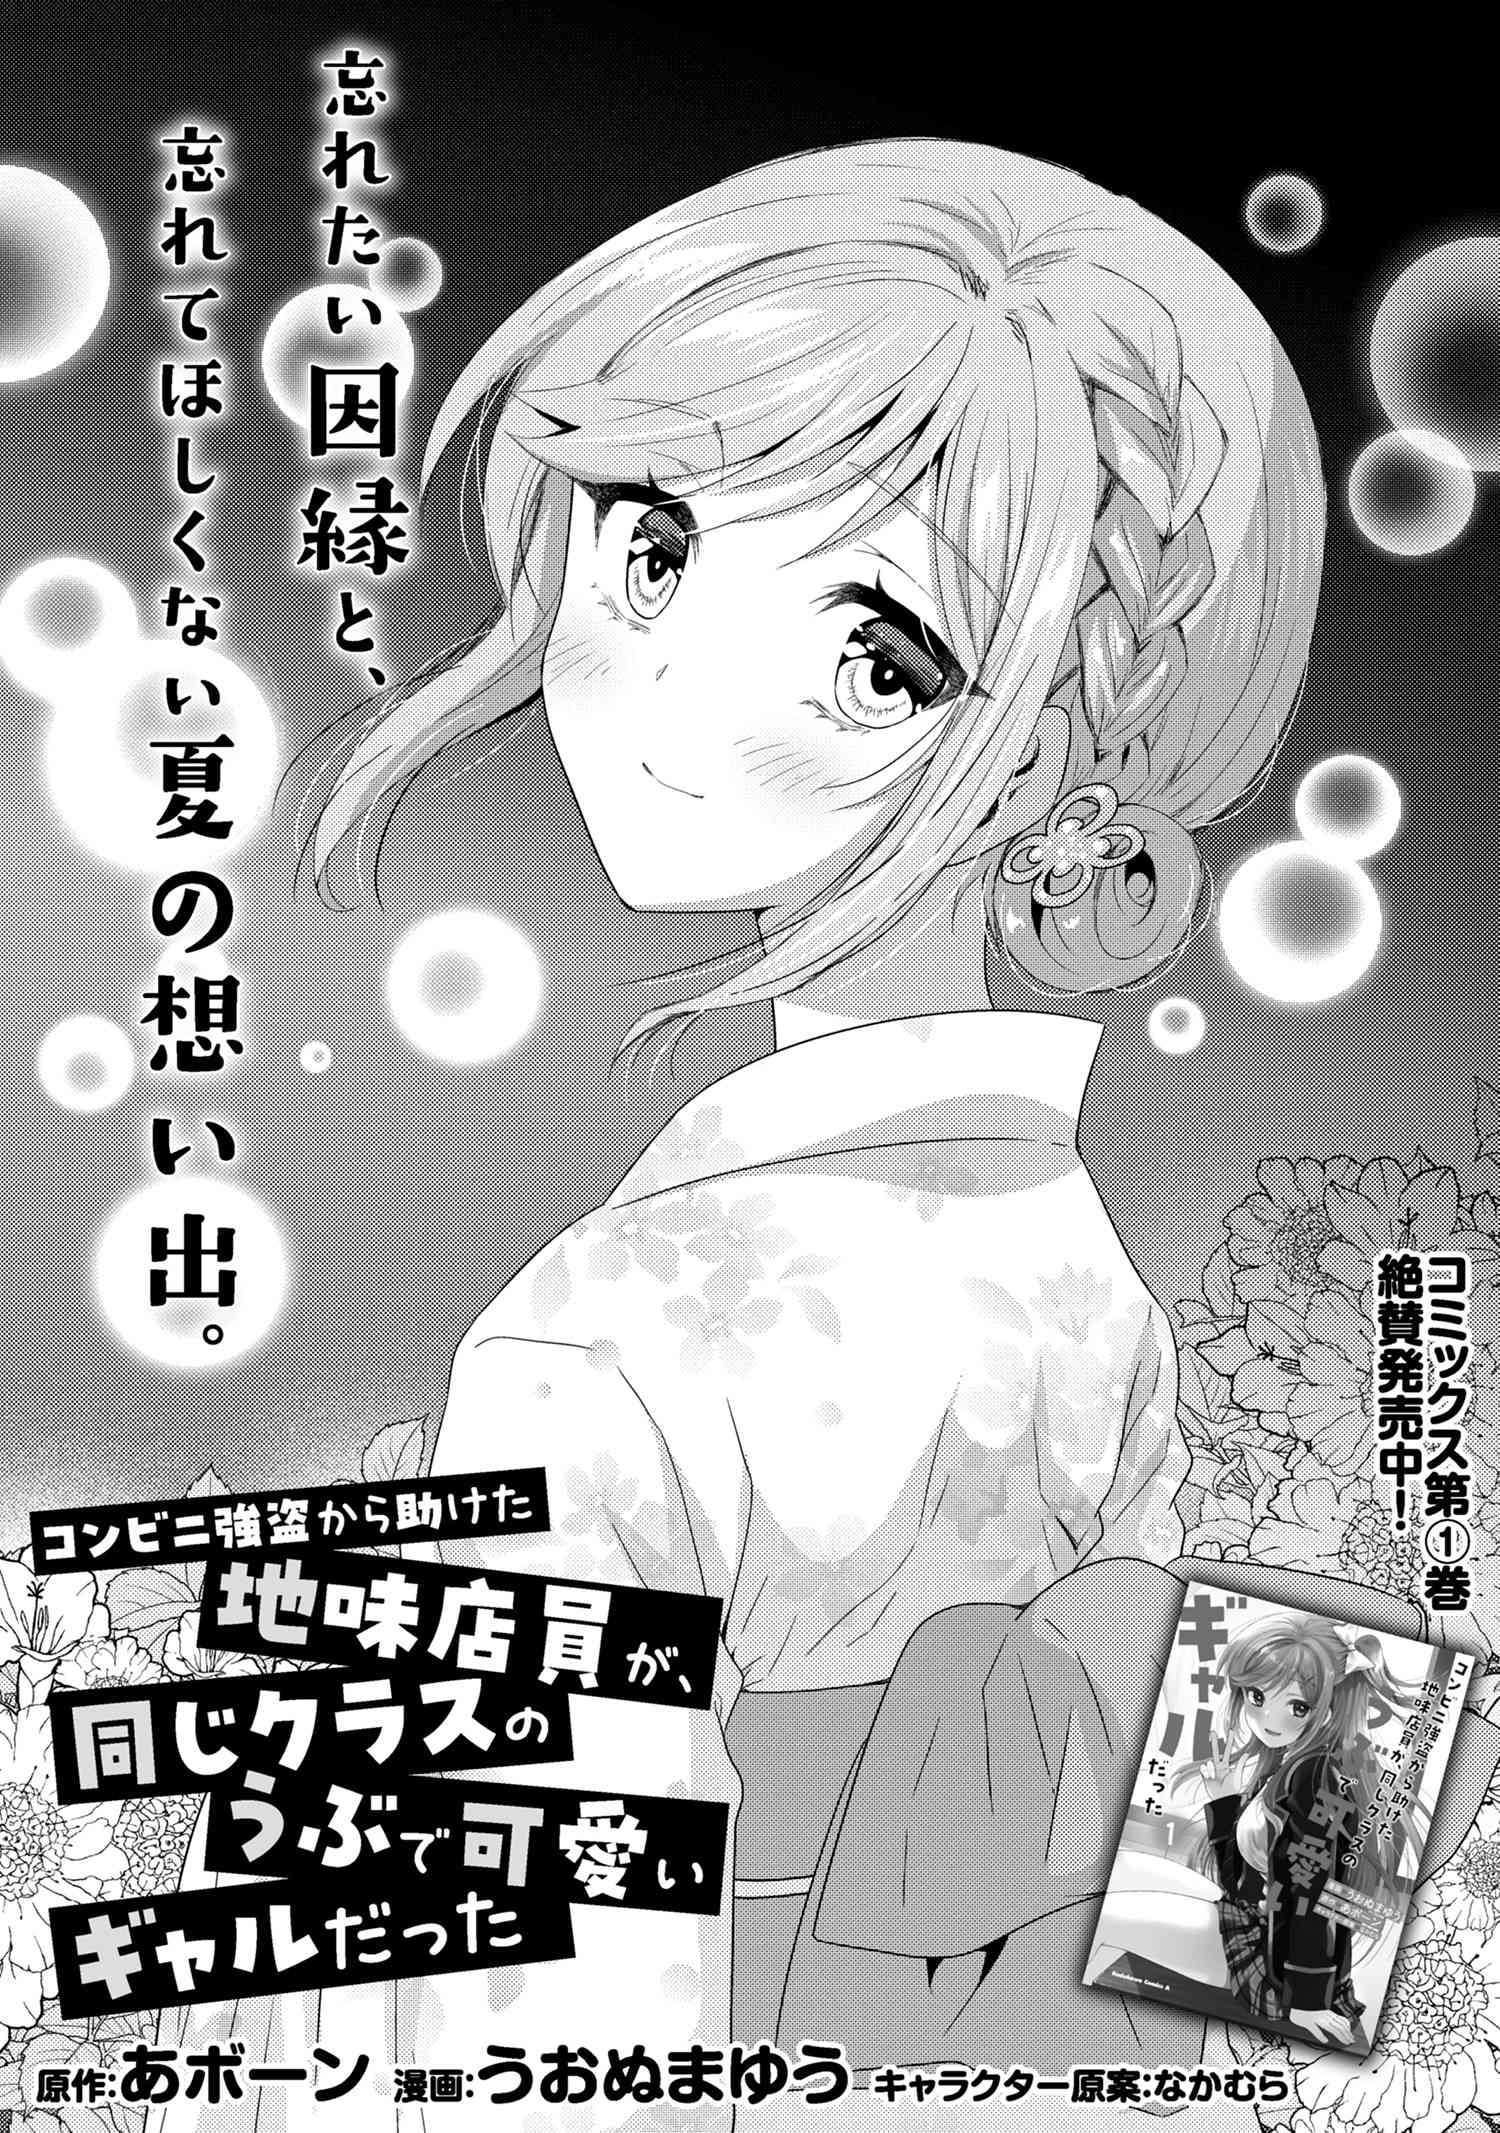 Konbini Goutou kara Tasuketa Jimi Tenin ga, Onaji Class no Ubu de Kawaii Gal datta - Chapter 10.1 - Page 1